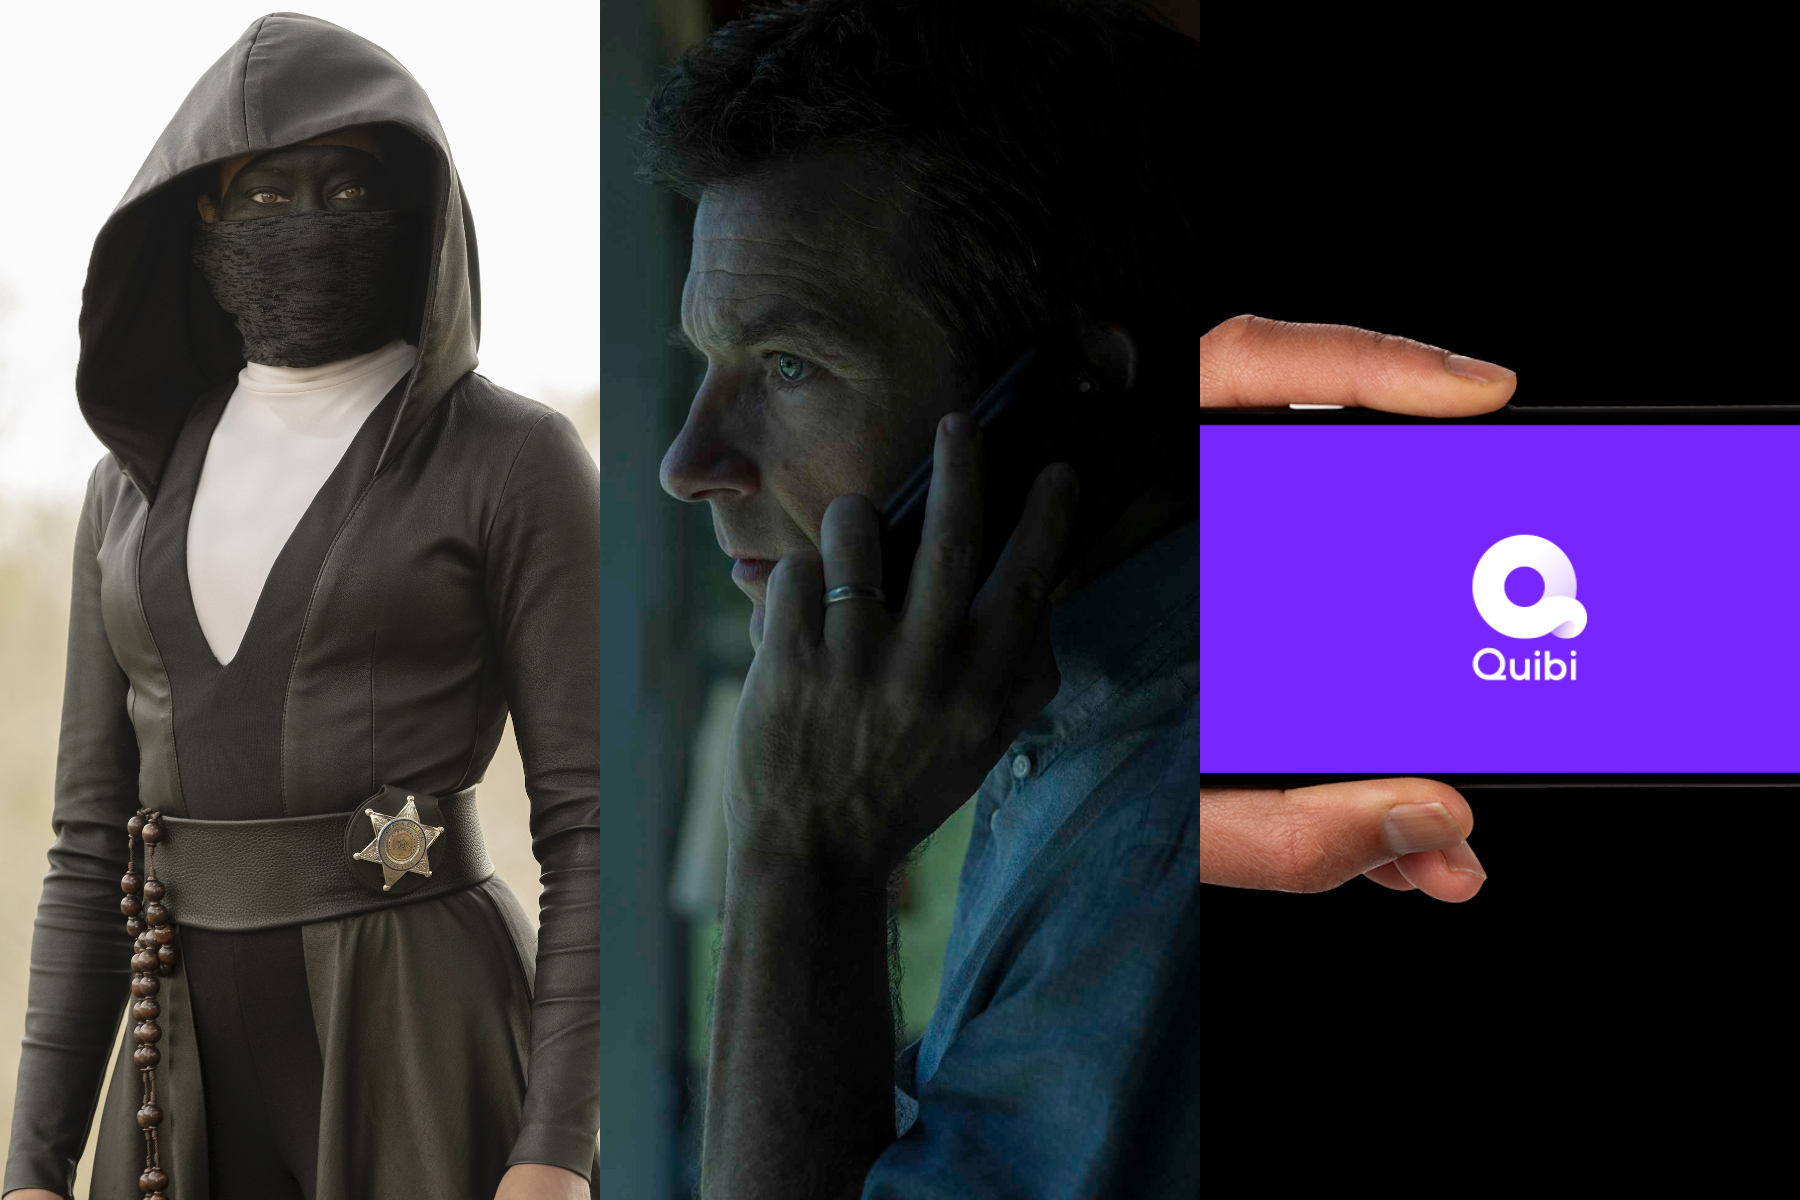 A triptych of Regina King in Watchmen, Jason Bateman in Ozark, and the Quibi logo.